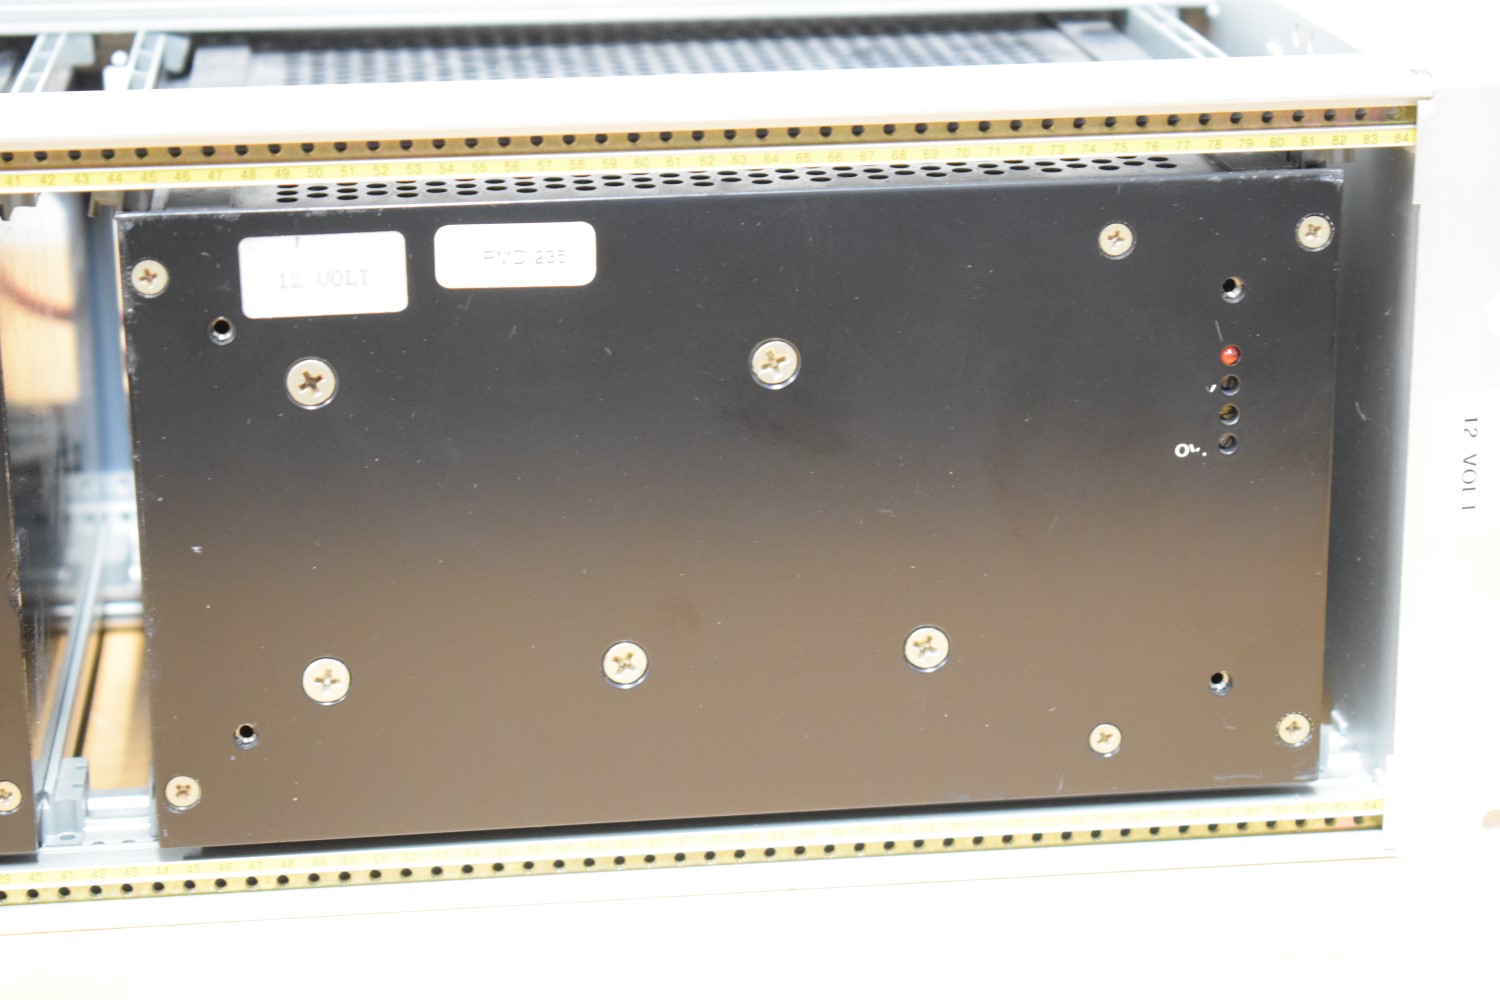 2x Delta Elektronika S15-18 12 Volts Power Supply – in 19inch rack Panel